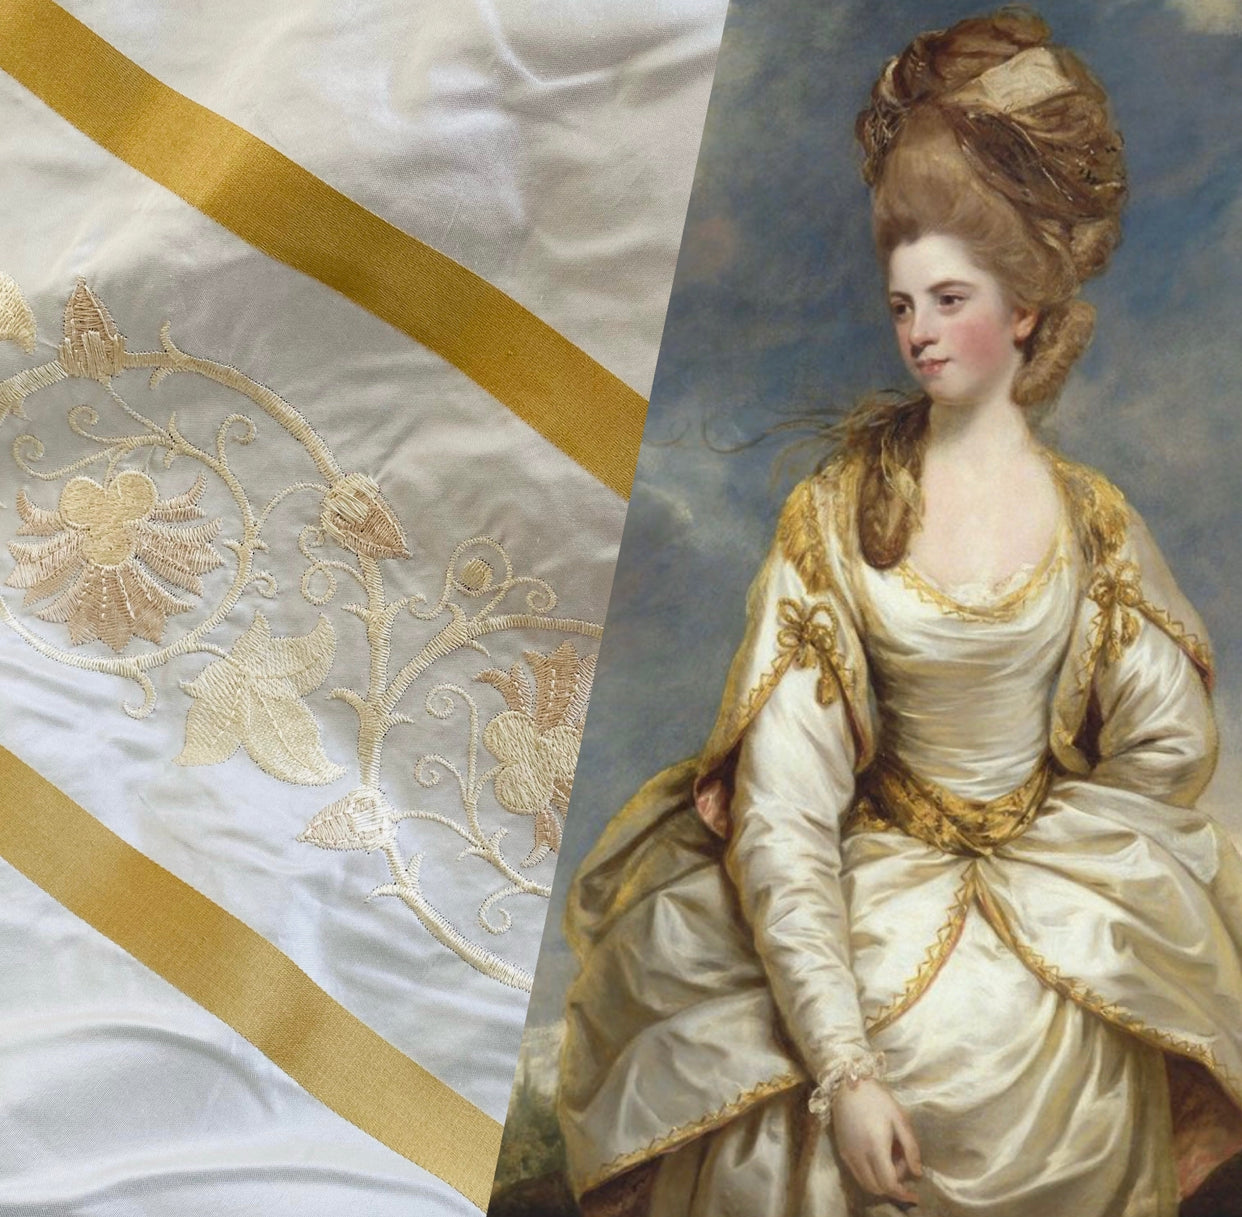 Duchess Jezebel 100% Silk Taffeta Embroidery Fabric - Dark Grey & Gold